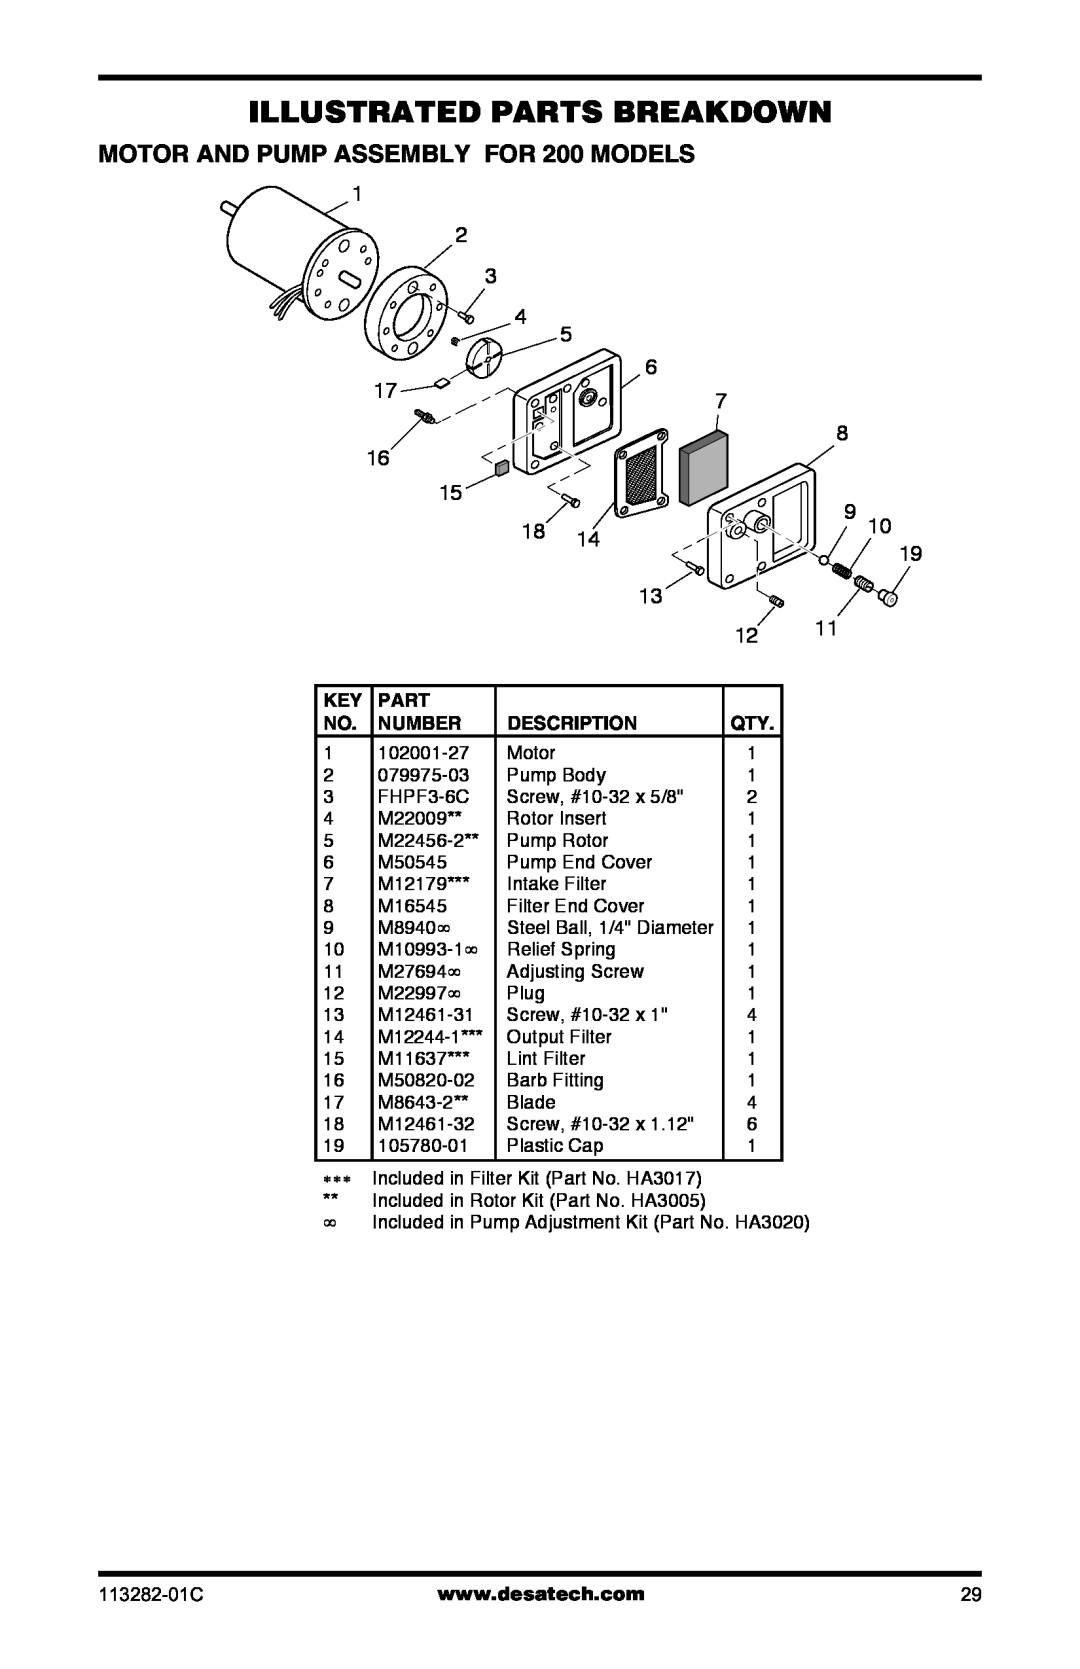 Desa BTU/HR owner manual Illustrated Parts Breakdown, MOTOR AND PUMP ASSEMBLY FOR 200 MODELS 